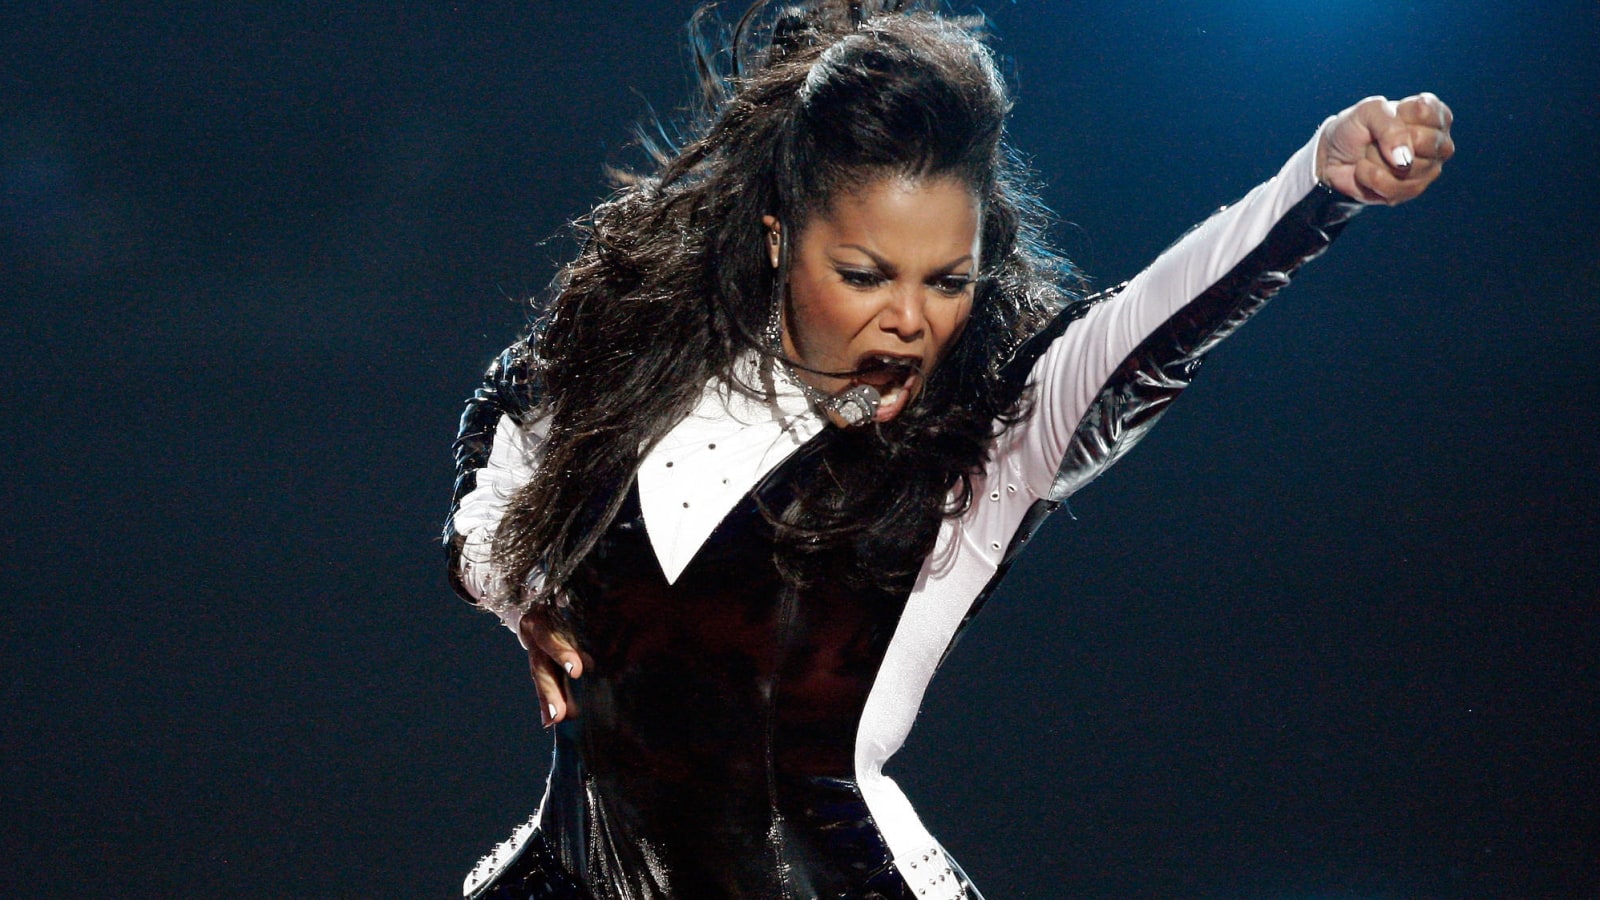 Janet Jackson's 25 biggest hits